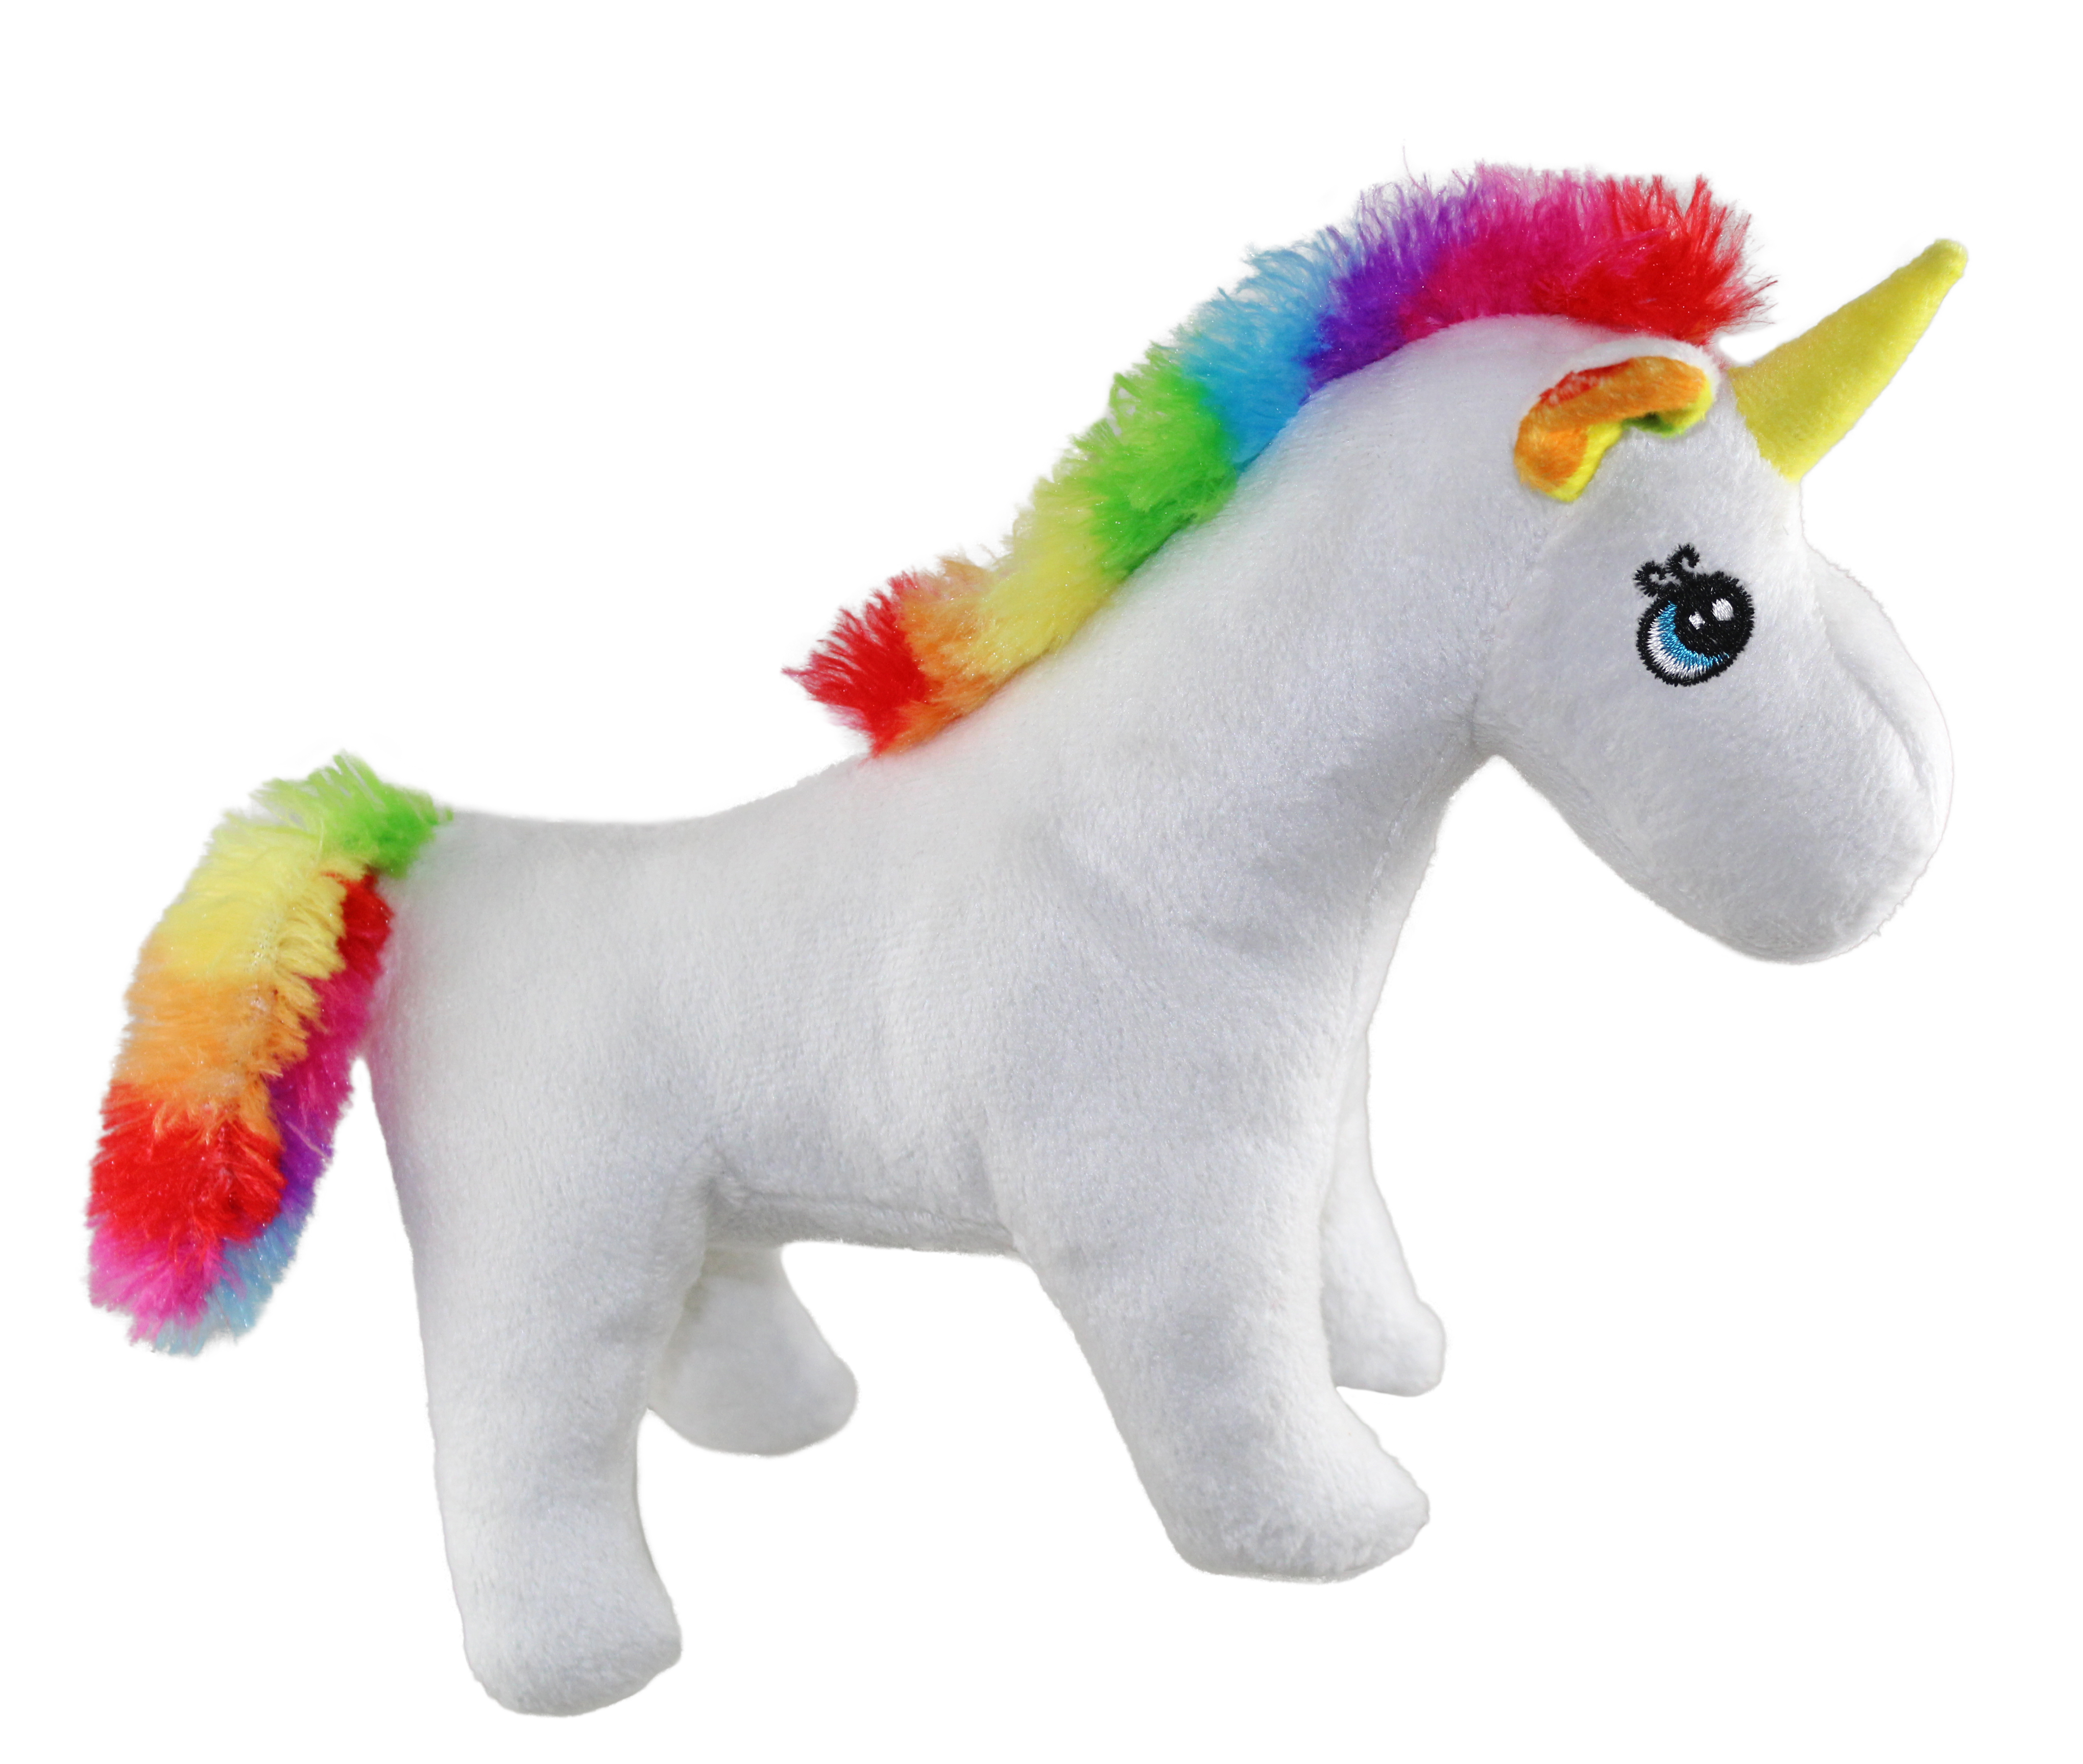 Plush Pal 11" Soft & Fluffy White Unicorn Stuffed Animal Toy with Rainbow Tail And Mane - image 1 of 5